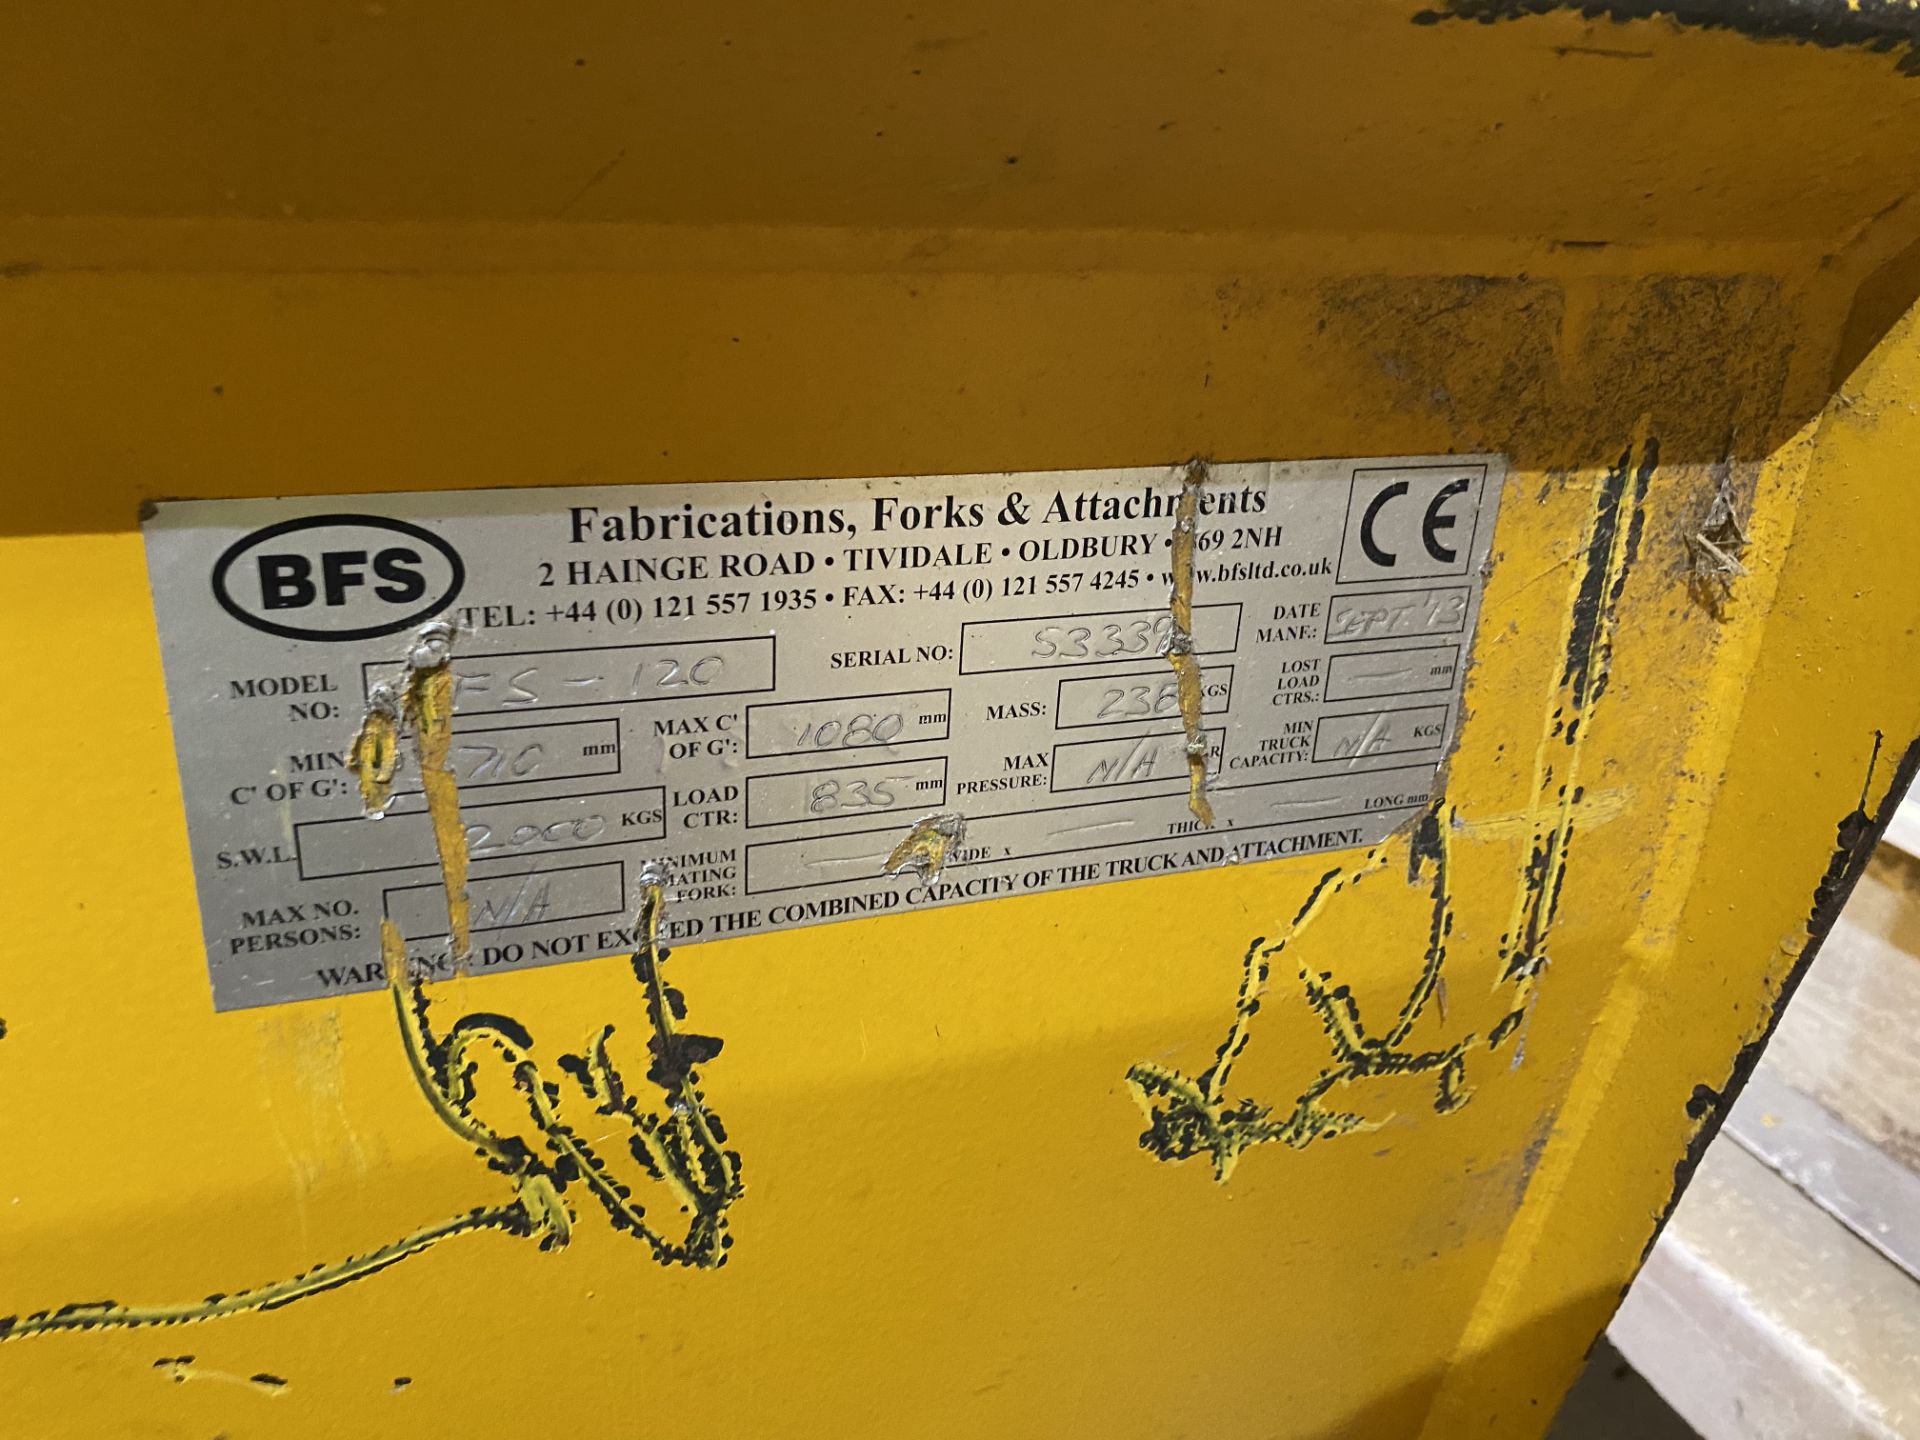 BFS FS-120 Fork Lift Truck Tip Skip, serial no. 53339, 2000kg cap. - Image 3 of 3